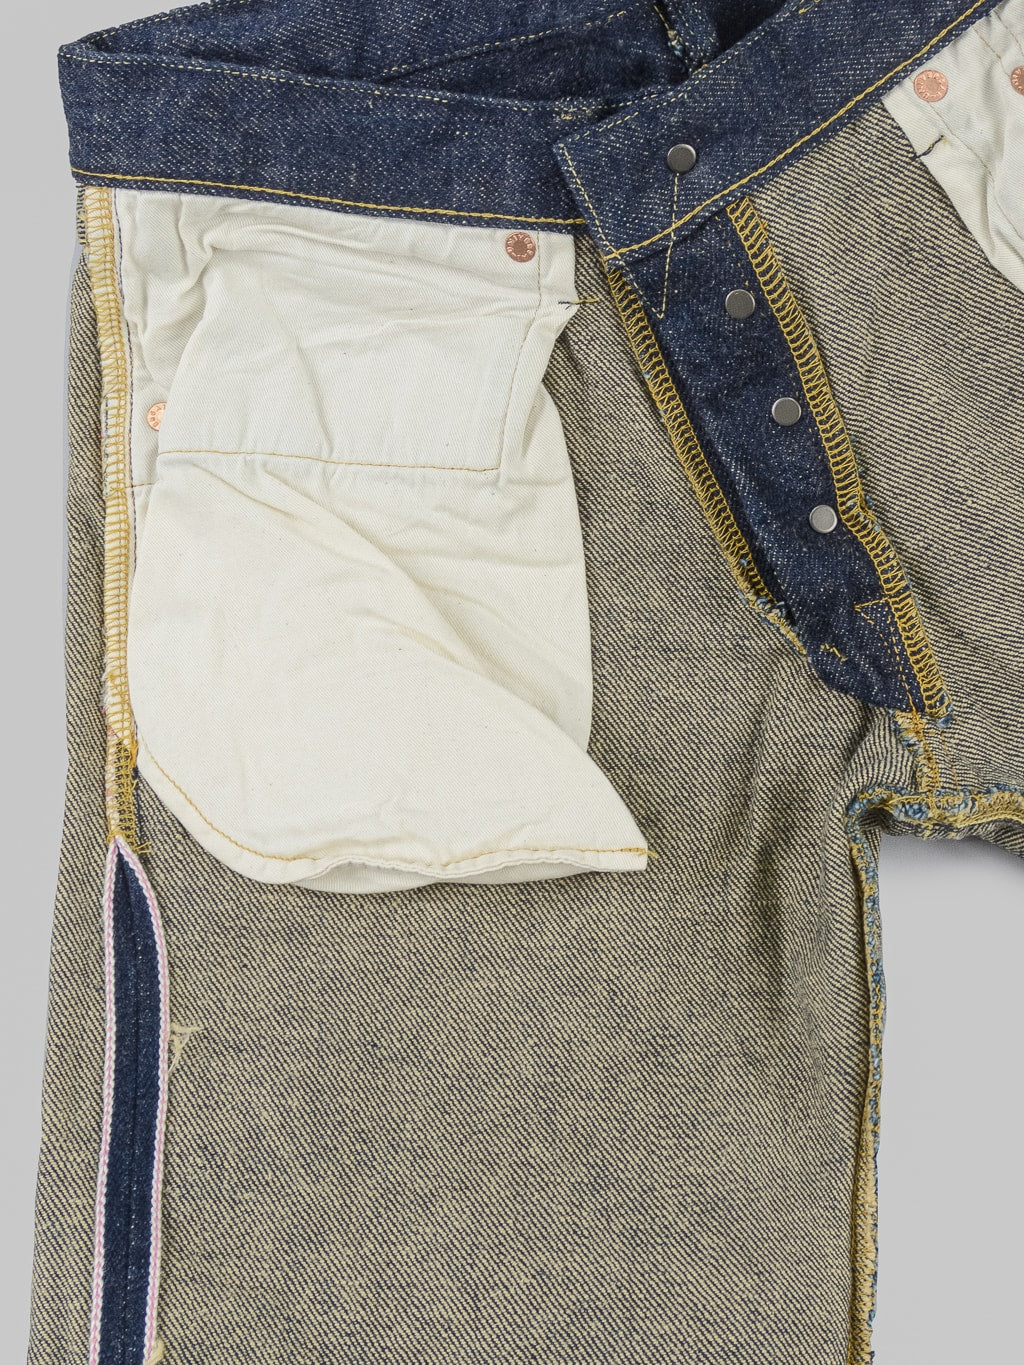 ONI Denim 288ZR Secret Denim 20oz Regular Straight Jeans weft pocket bags